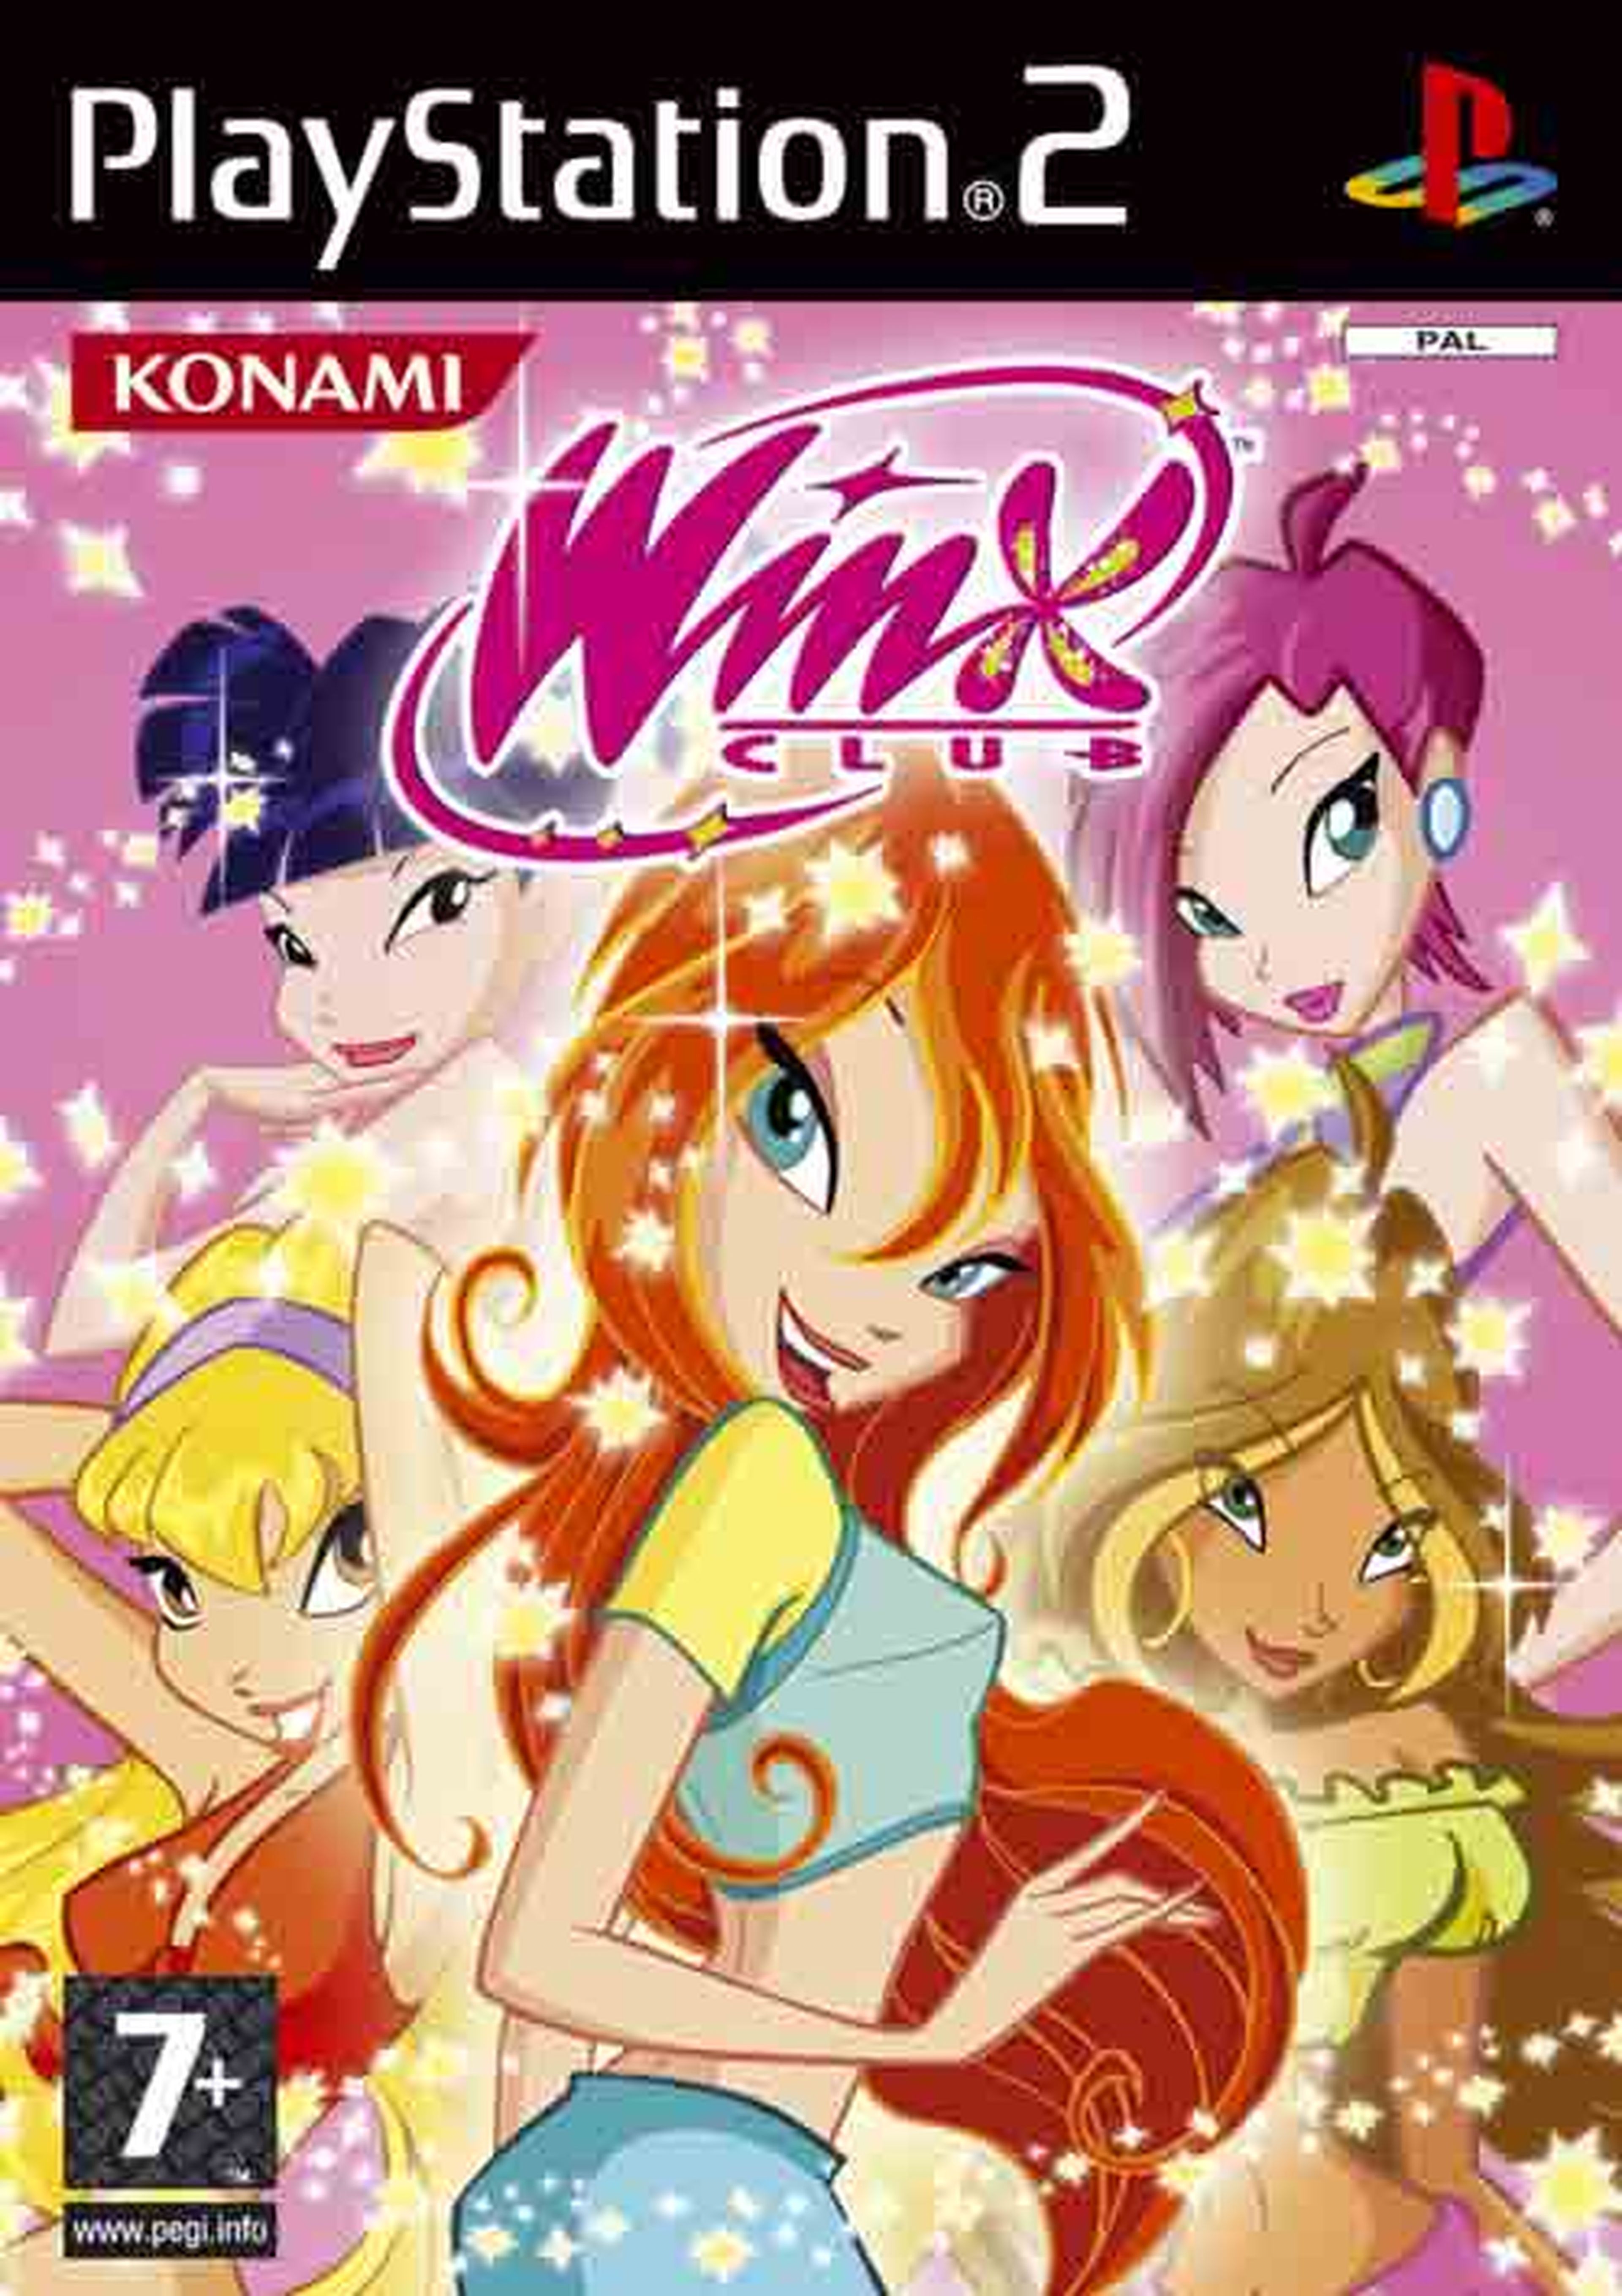 Winx игра на пк. Игра Winx Club Konami. Клуб Винкс школа волшебниц. Winx Club (игра, 2006). Винкс клуб игра 2006.